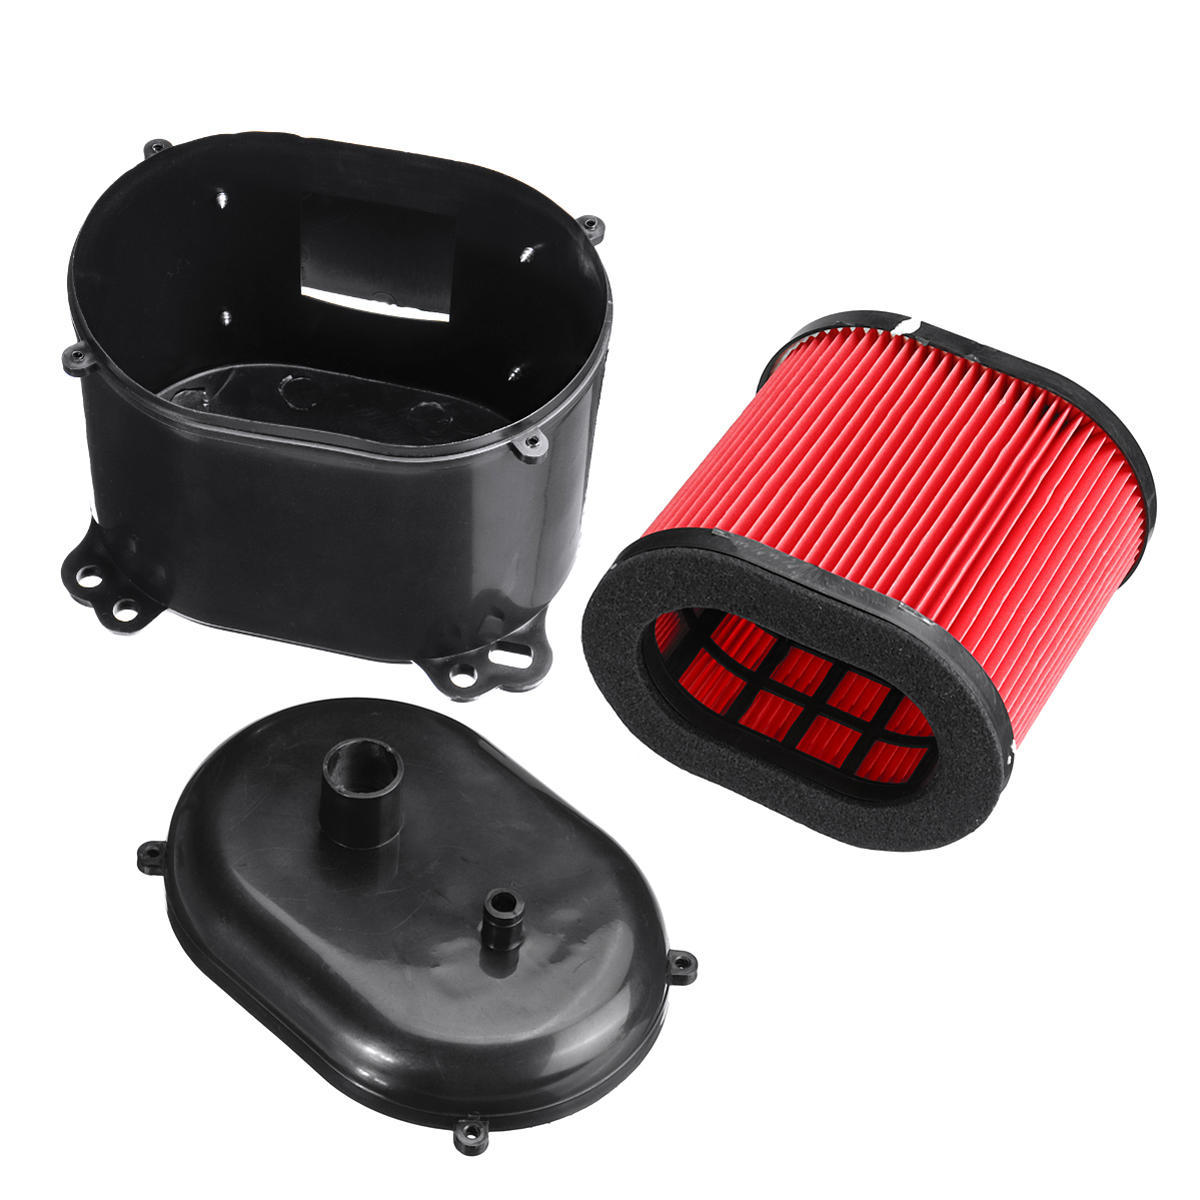 25mm-Heater-Air-Intake-Filter-Silencer-For-Dometic-Eberspacher-Webasto-Diesel-Heater-1595035-8